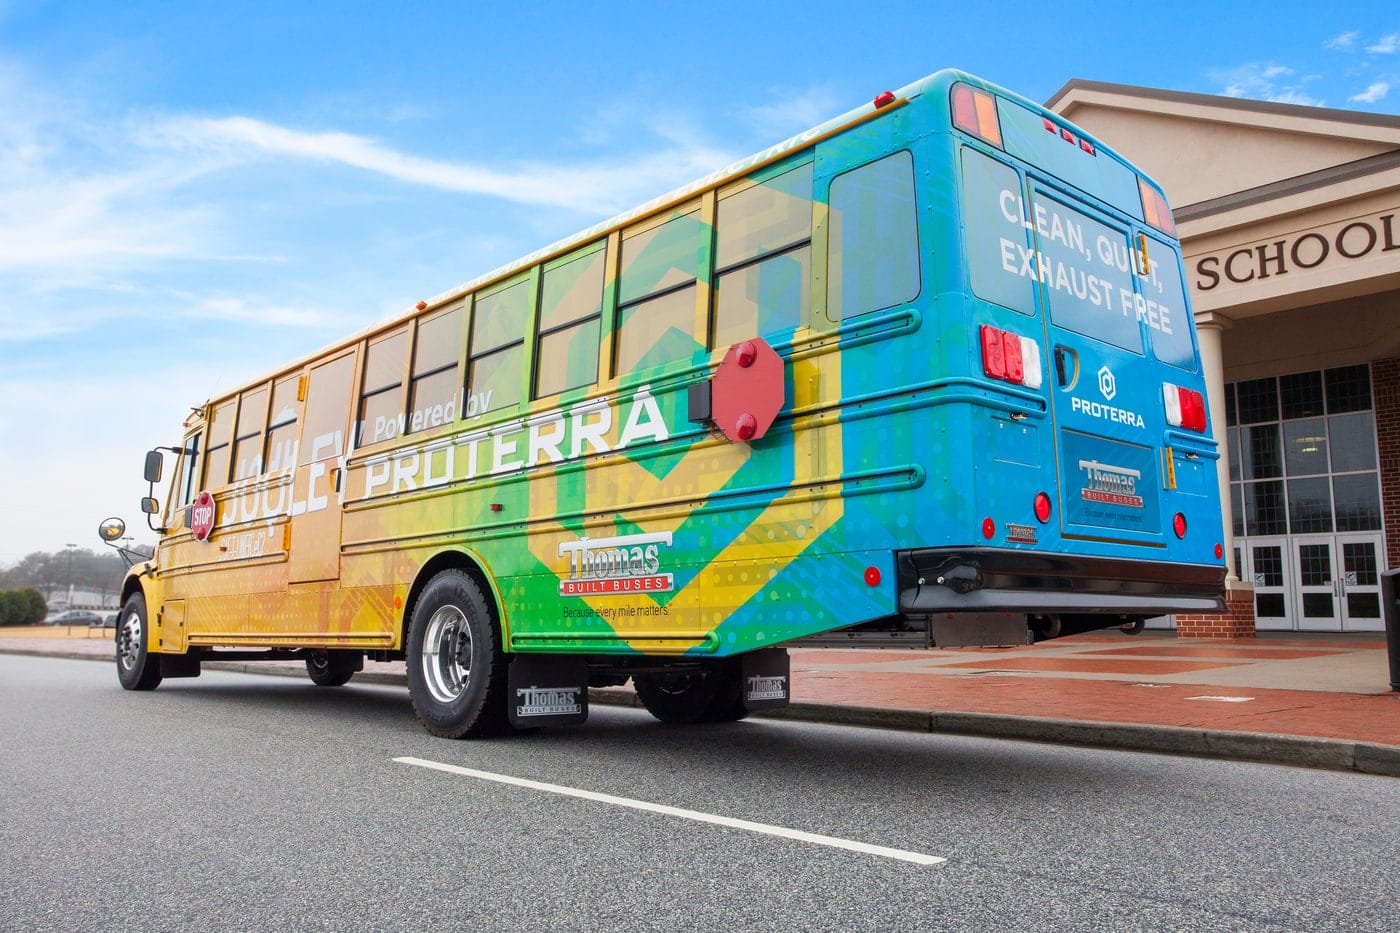 California solar + school buses